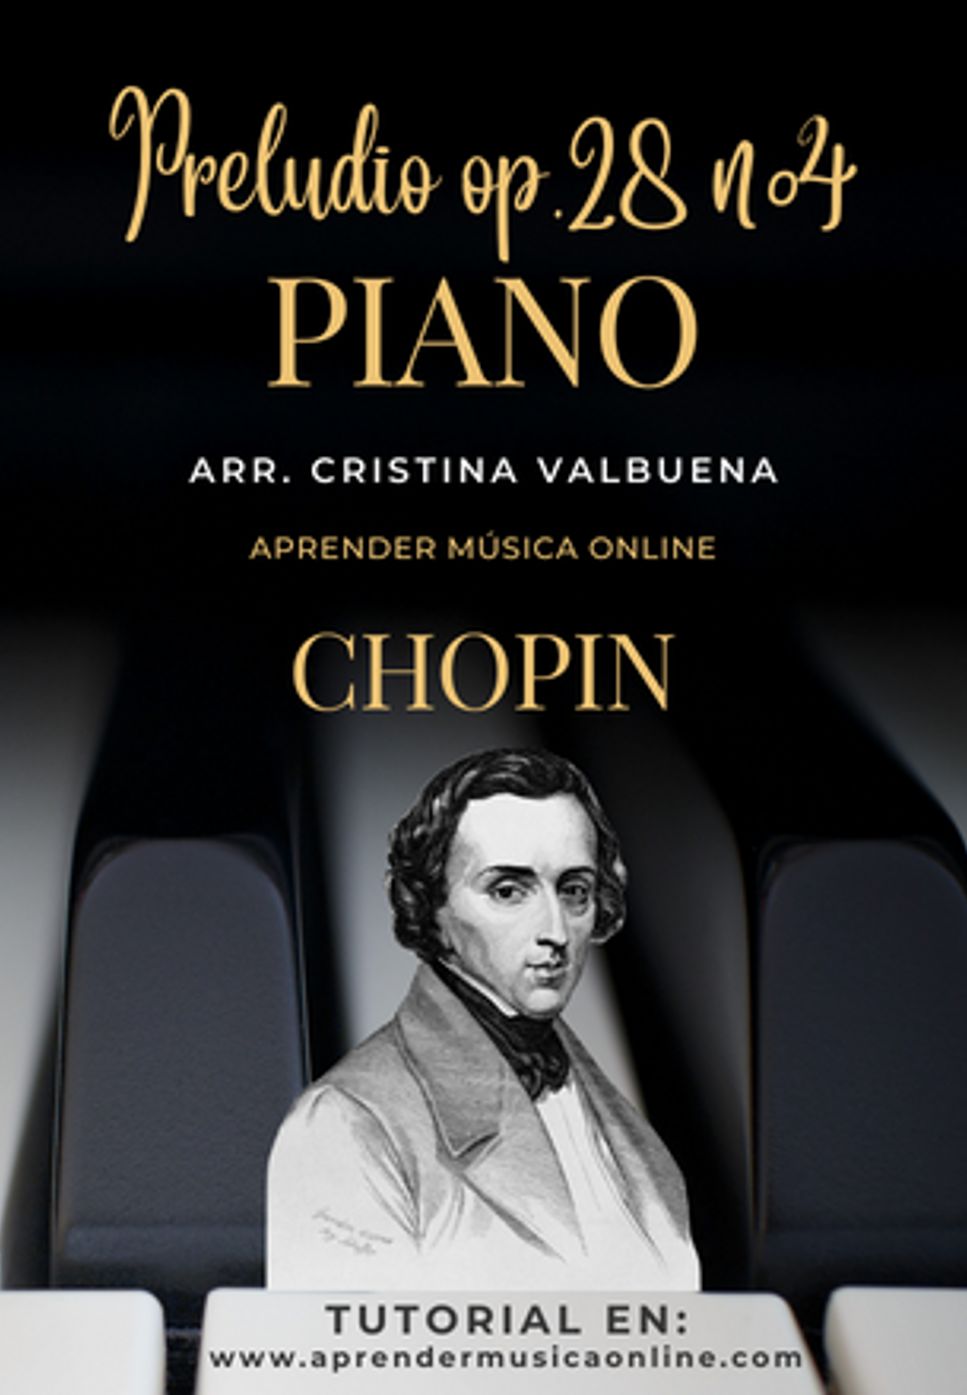 Chopin - Preludio op.28 nº4 by Cristina Valbuena